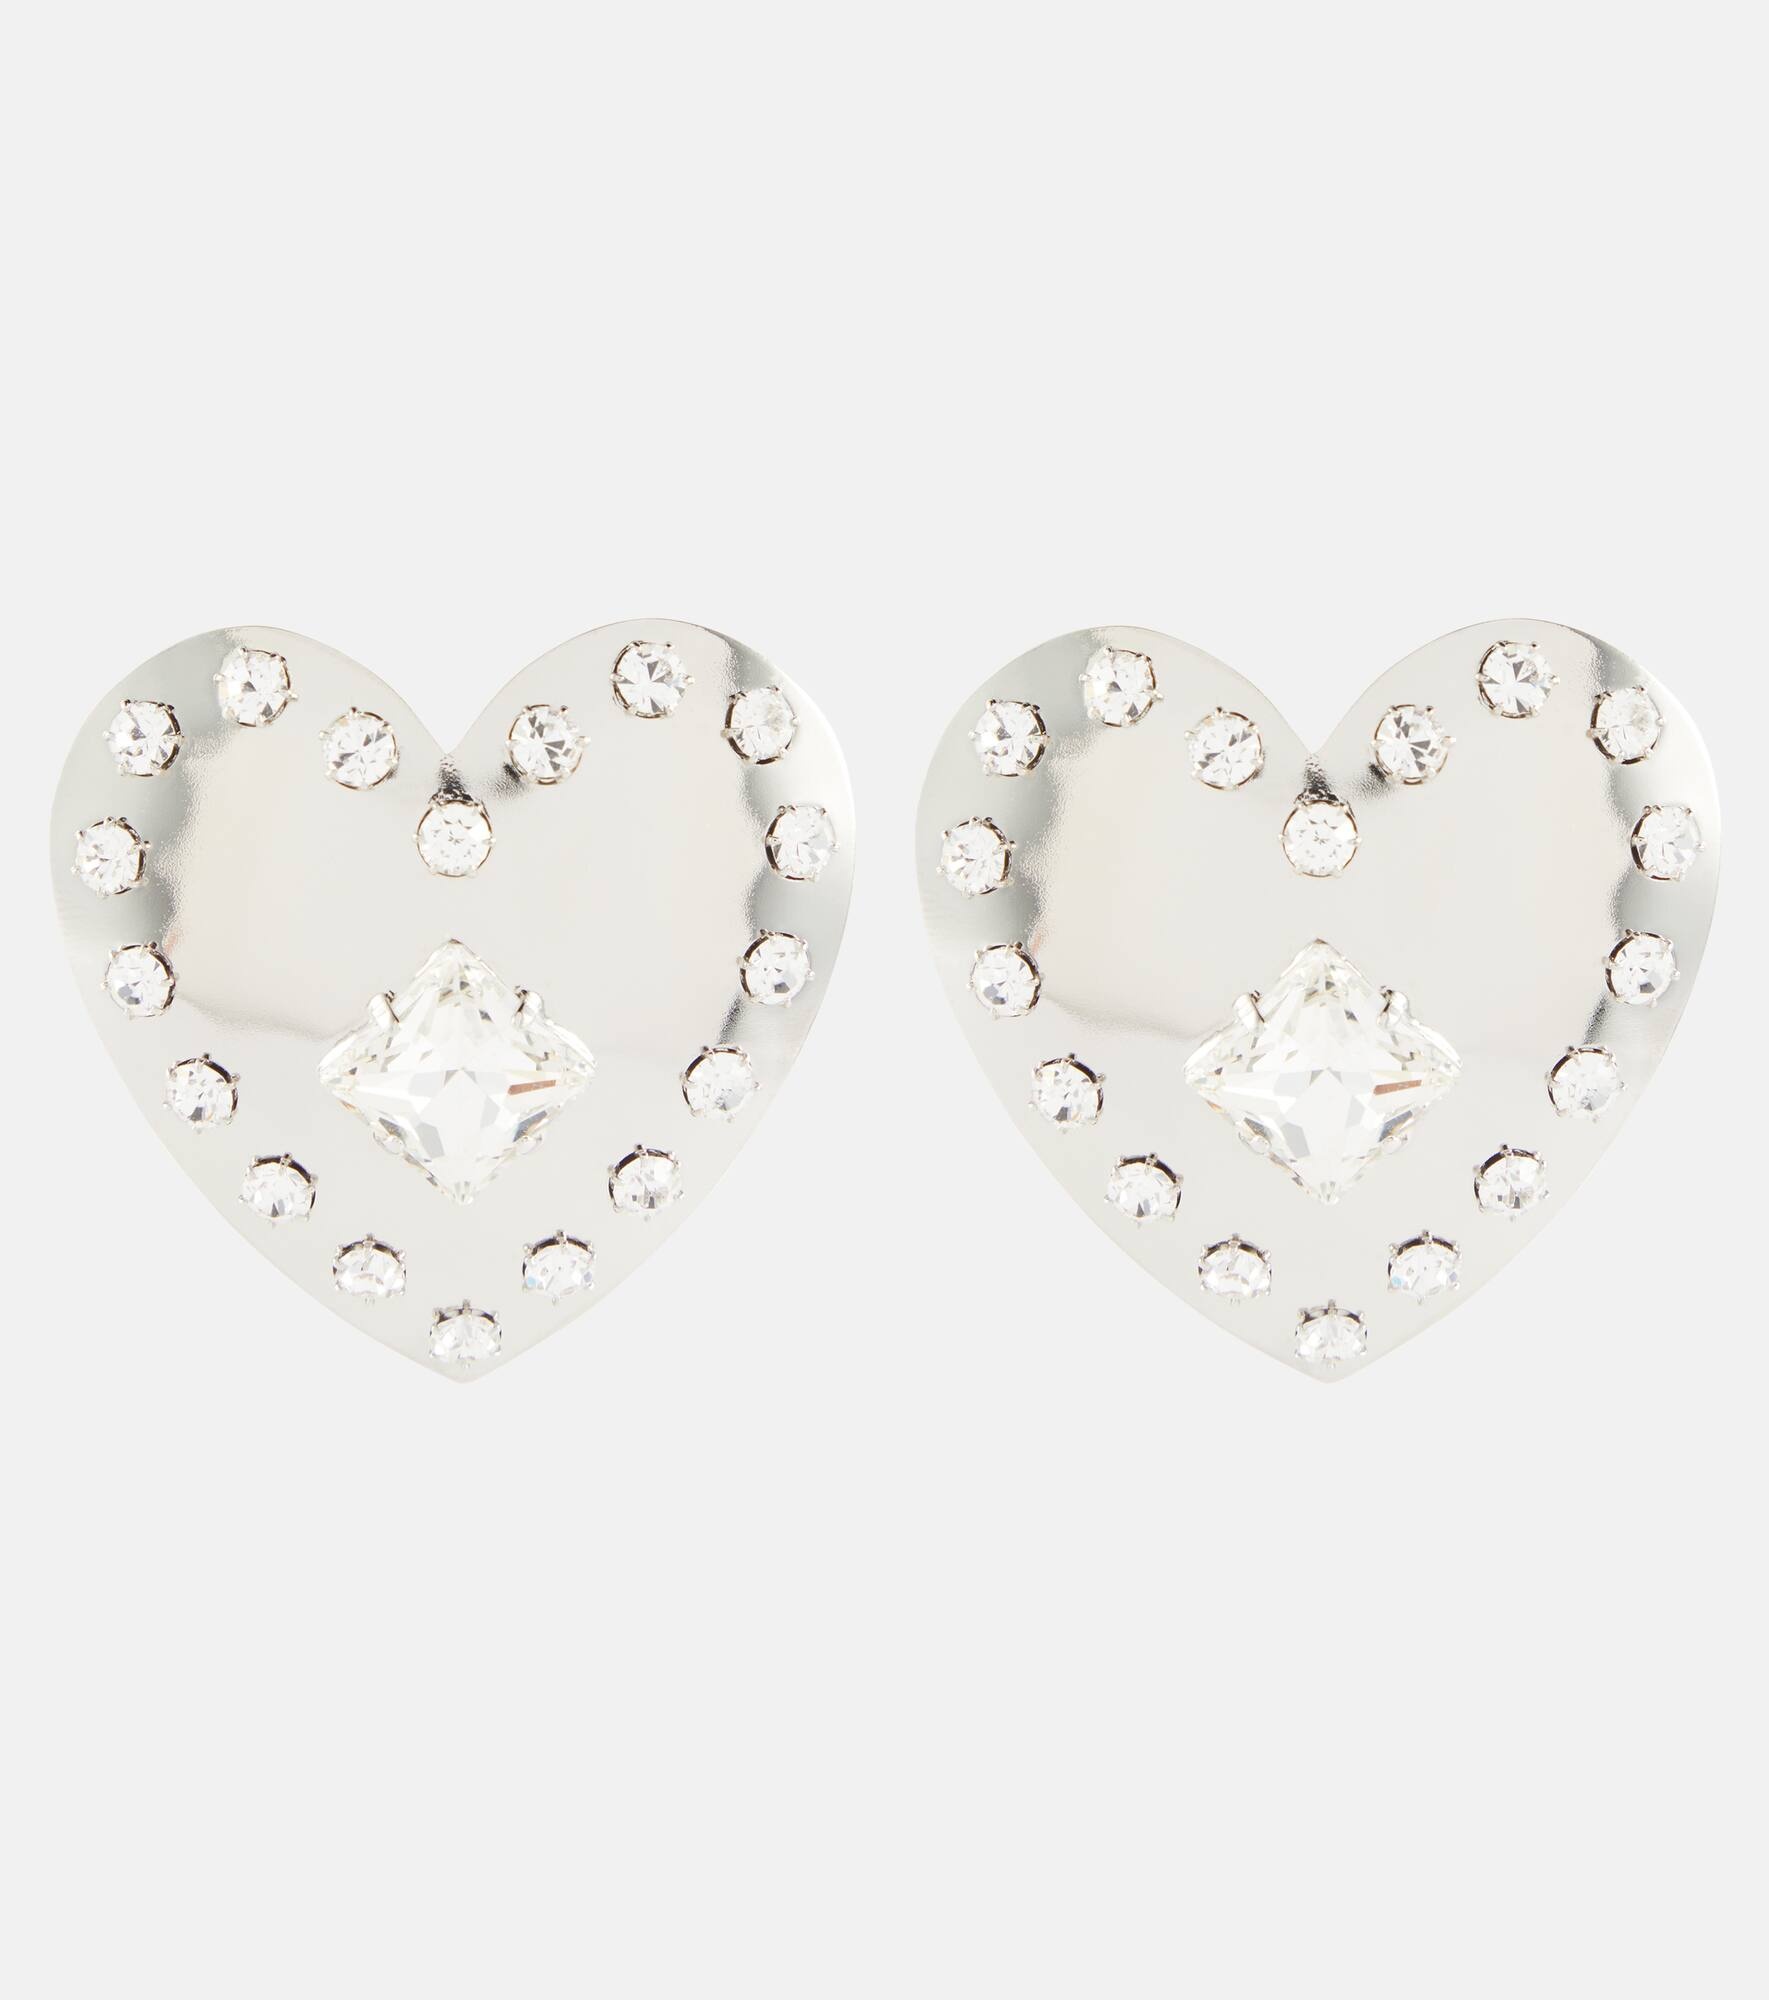 Crystal-embellished earrings - 1